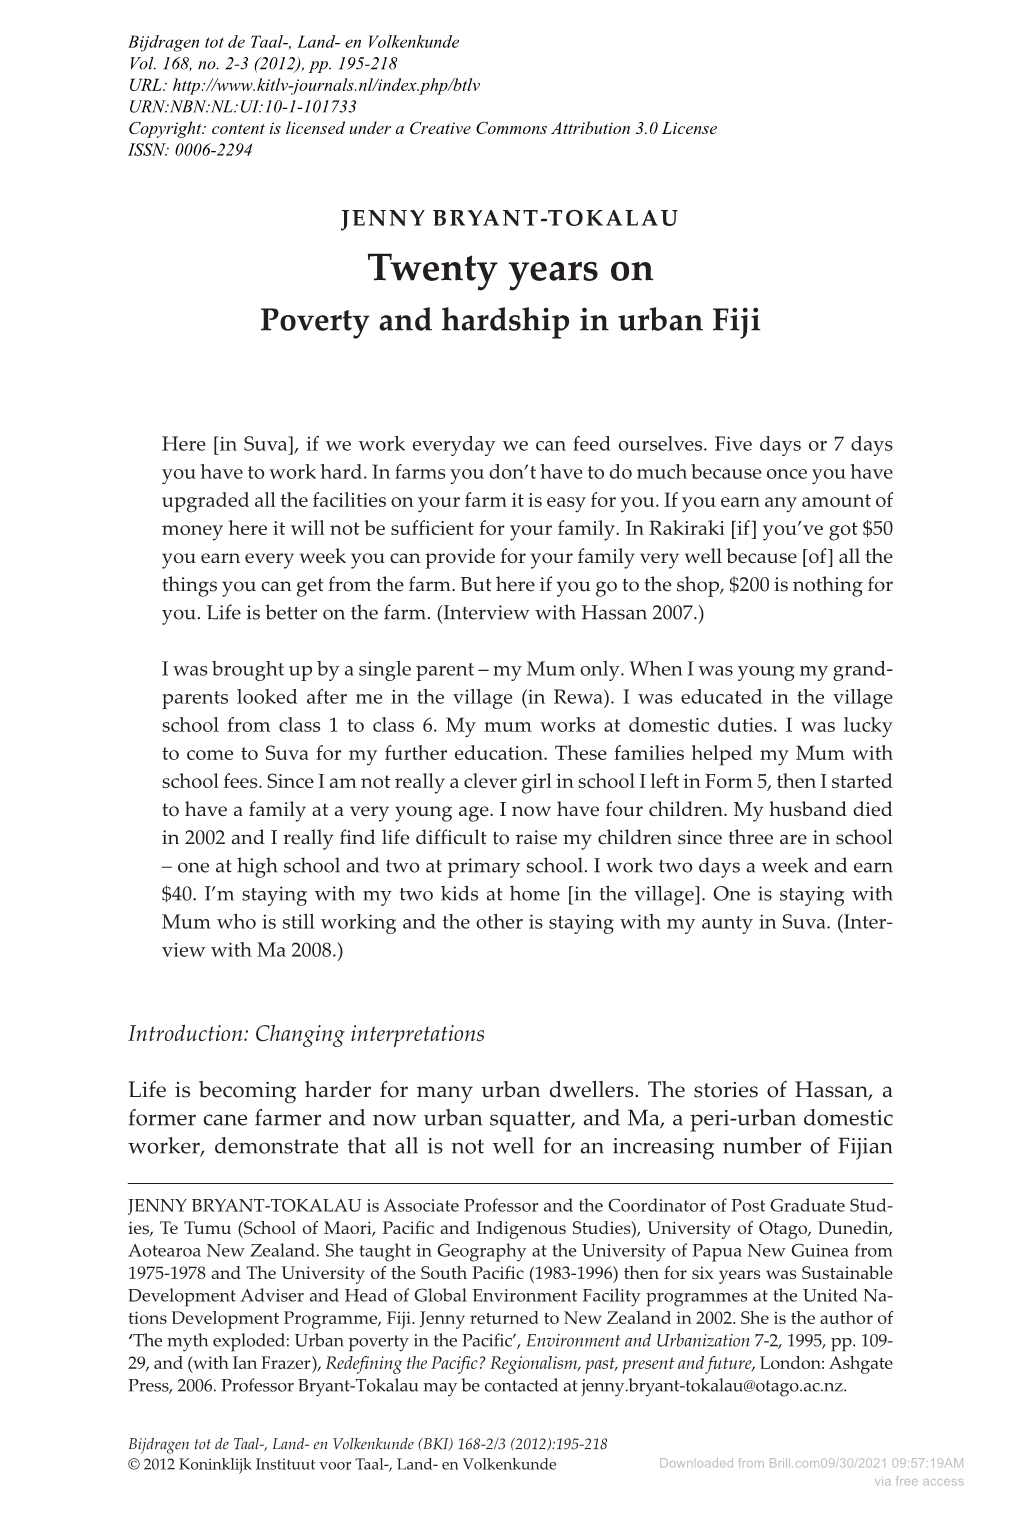 Twenty Years on Poverty and Hardship in Urban Fiji